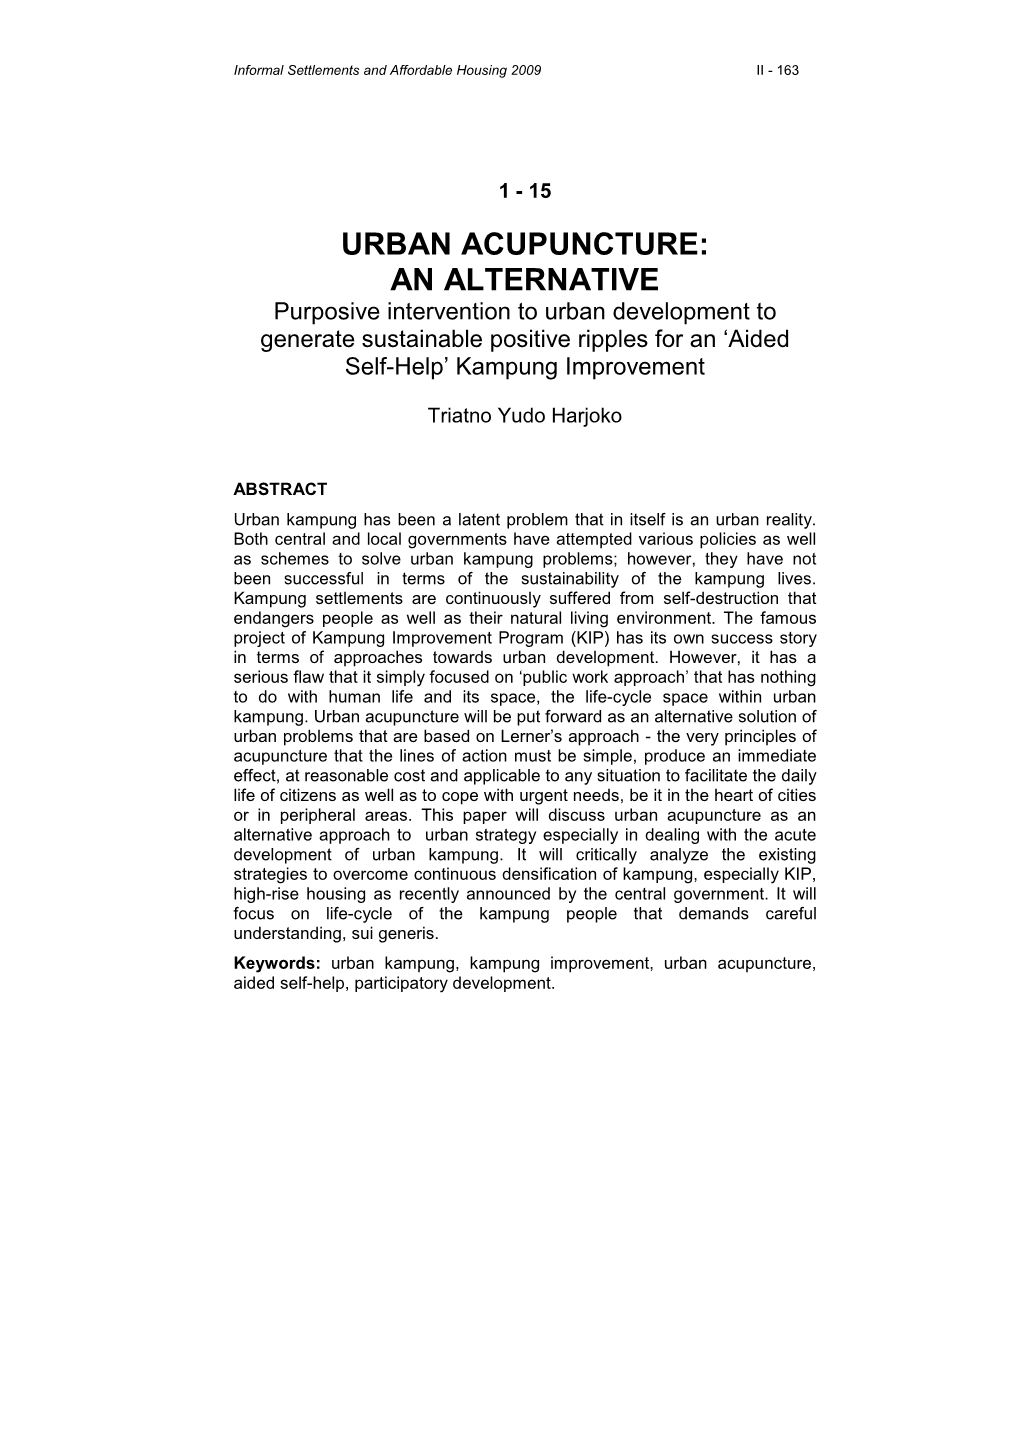 Urban Acupuncture: an Alternative